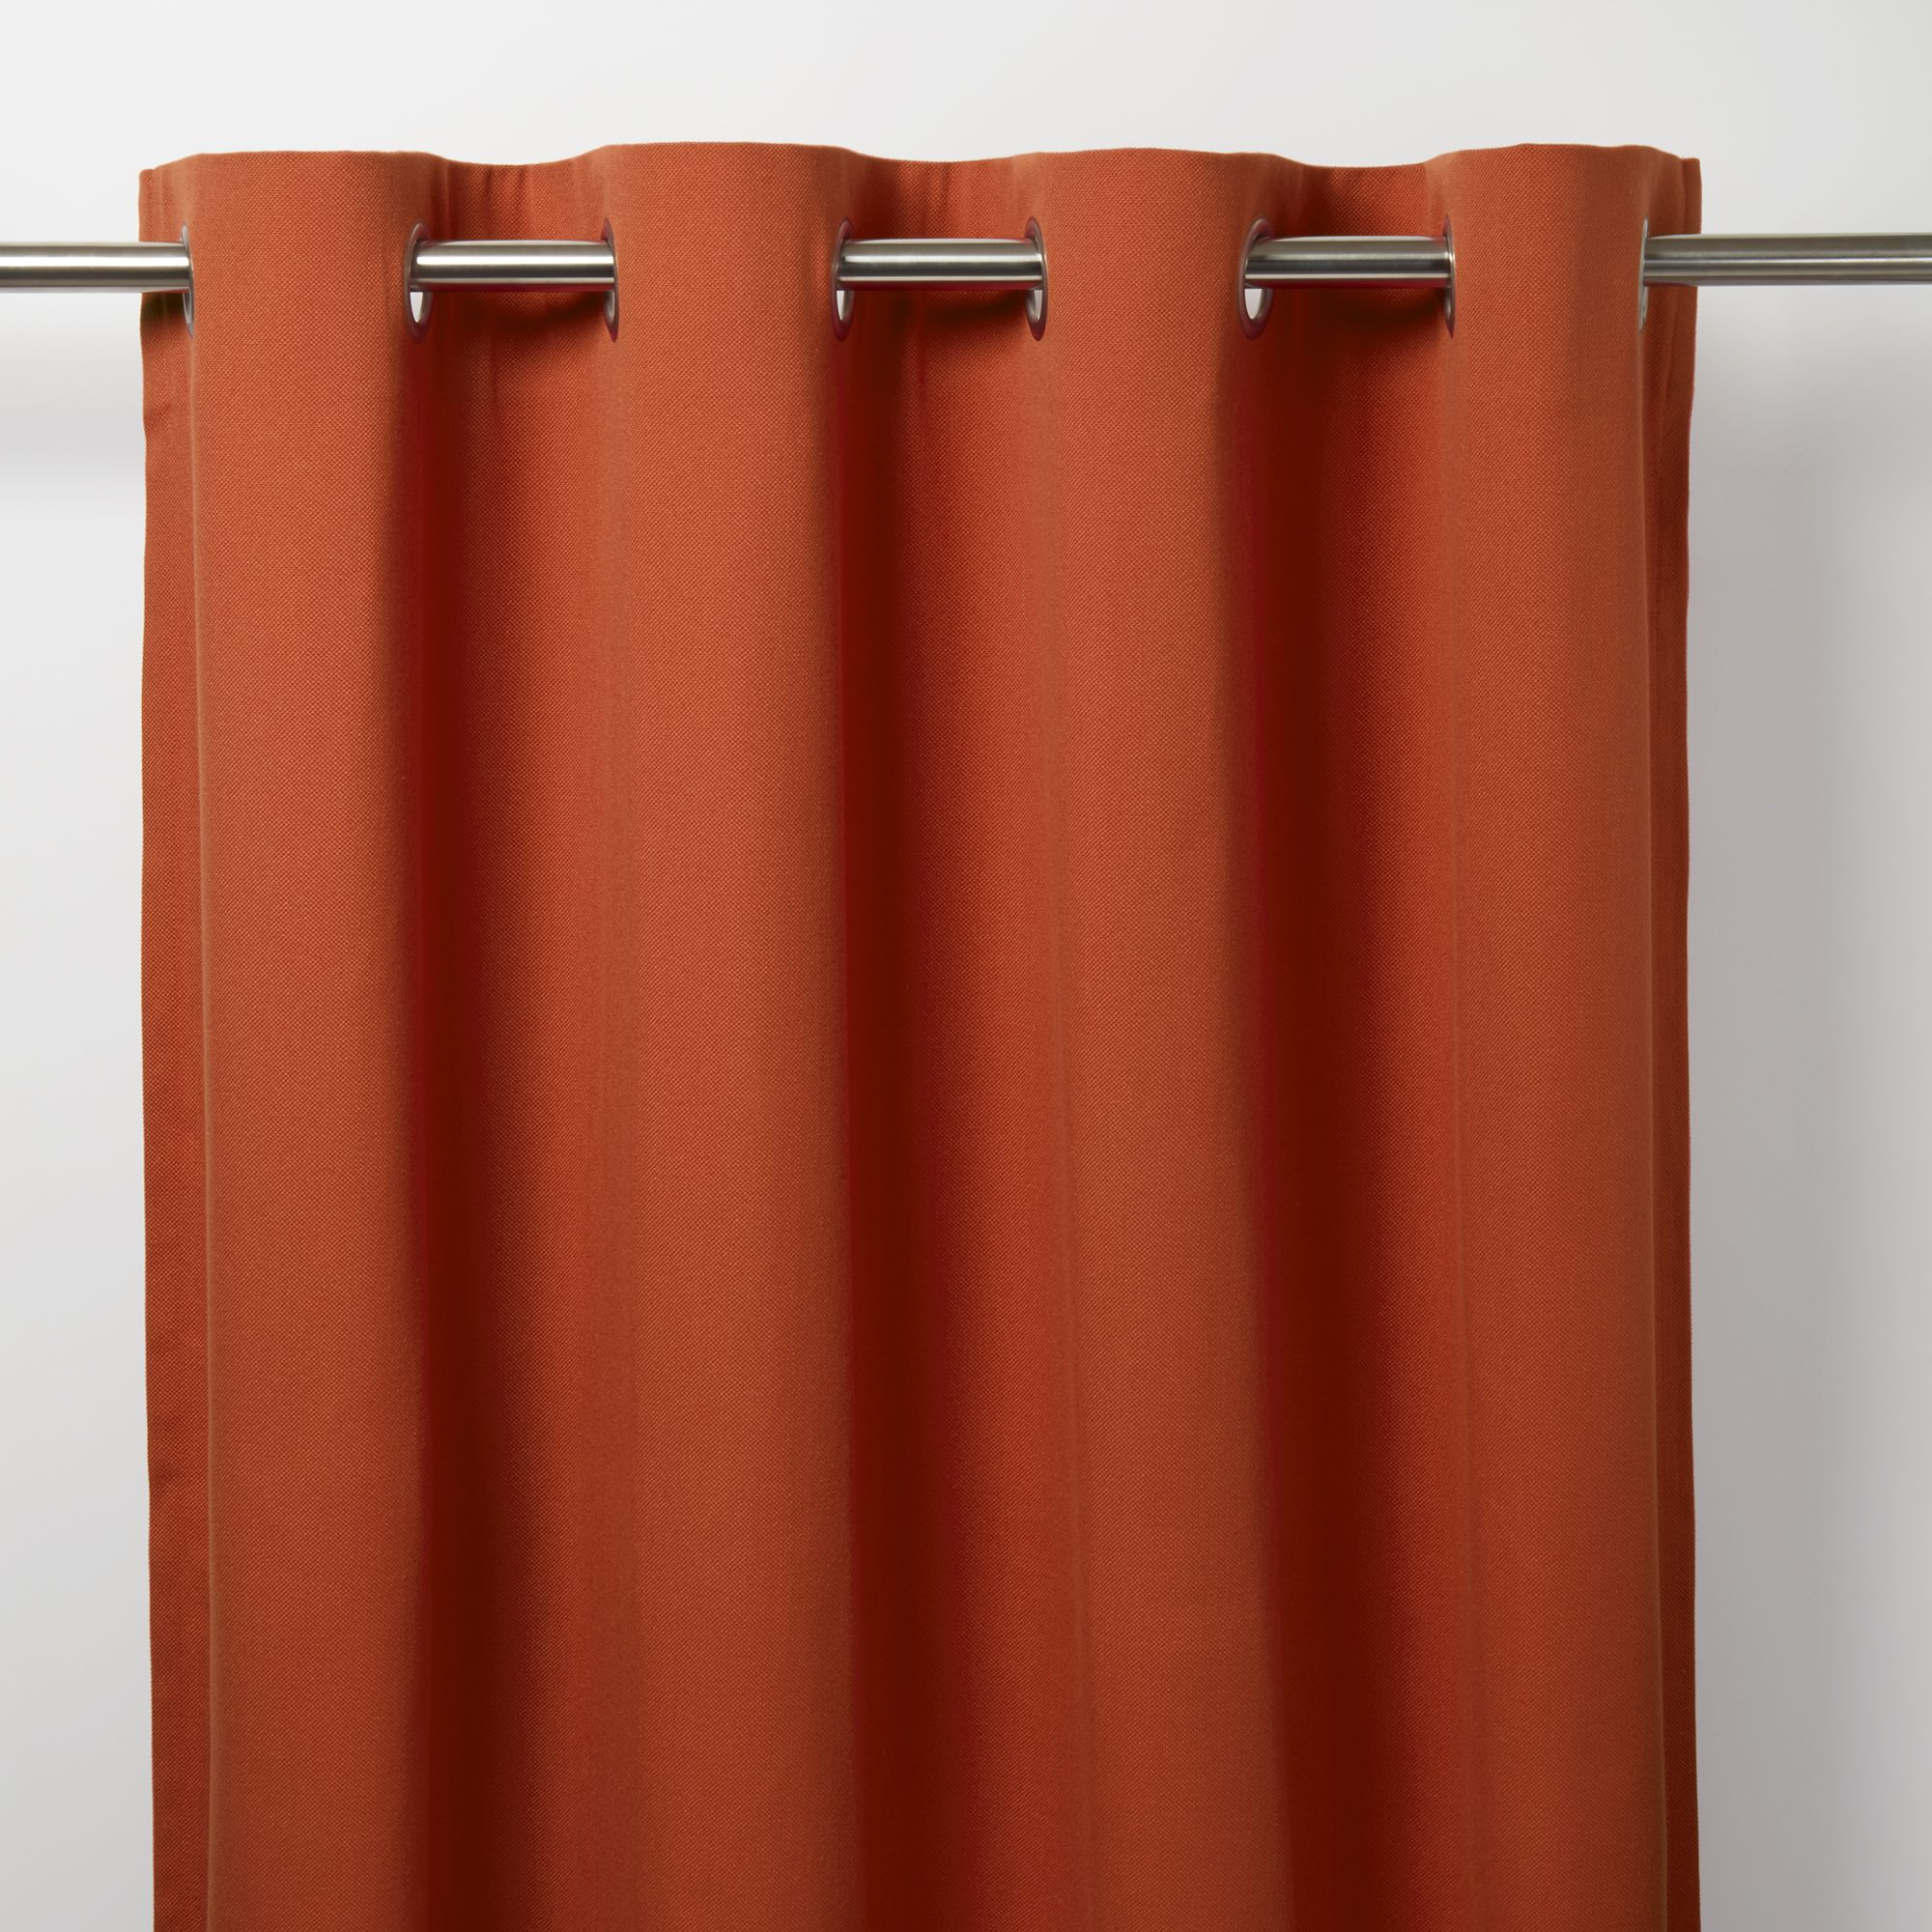 Taowa Orange rust Plain Unlined Eyelet Curtain (W)167cm (L)183cm, Single